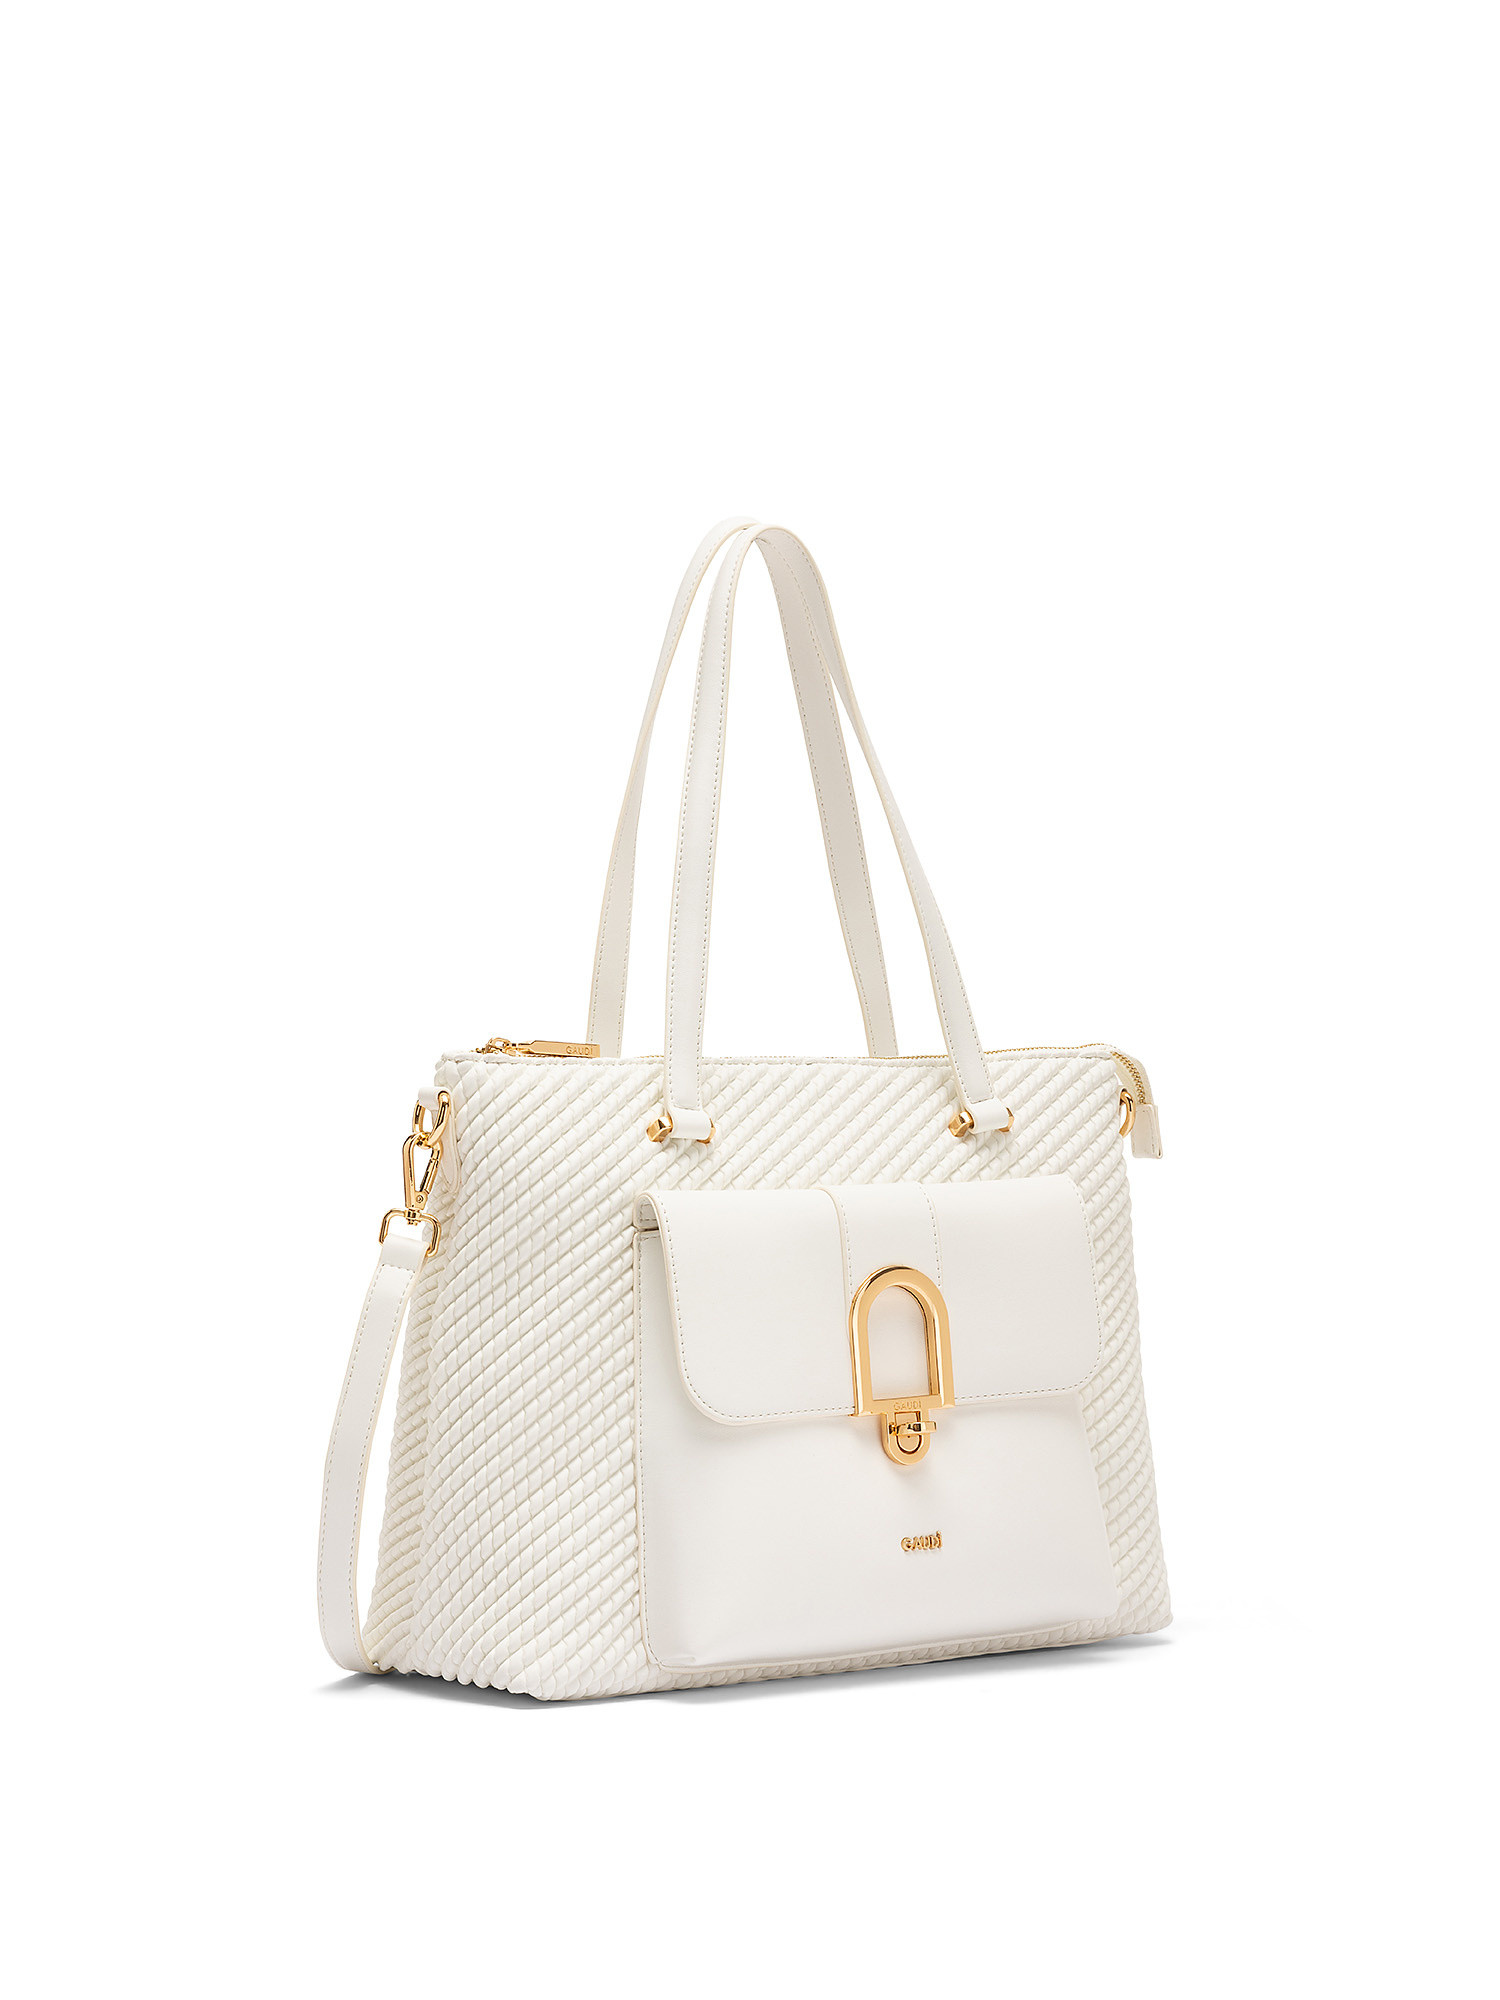 Thalissa shopping bag, White, large image number 1